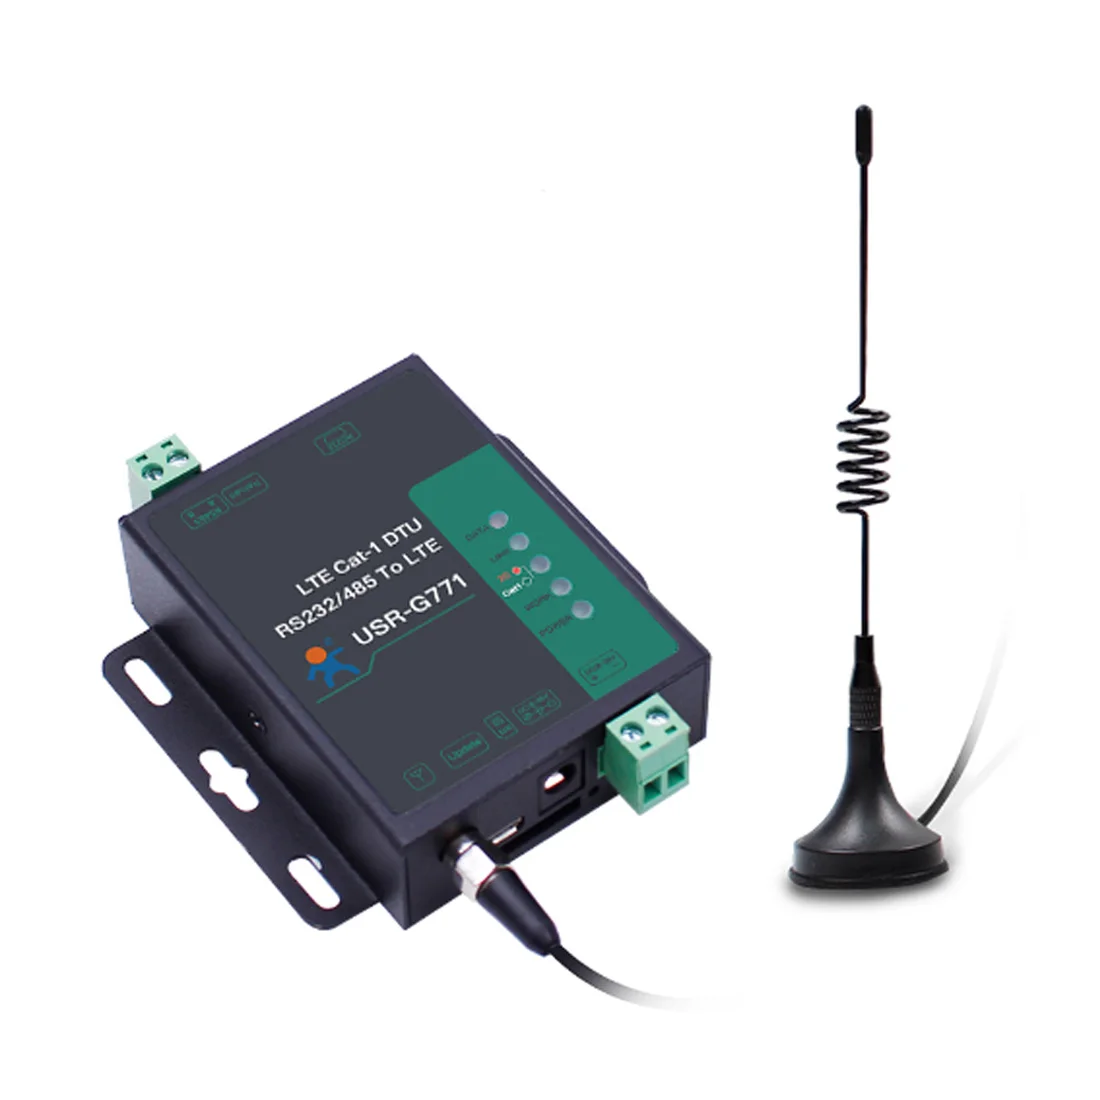 USR-G771-E LTE CAT 1 Cellular Modem Support LTE & GSM TCP UDP Transparent Transmission RS232 RS485 Interfaces with SIM Card